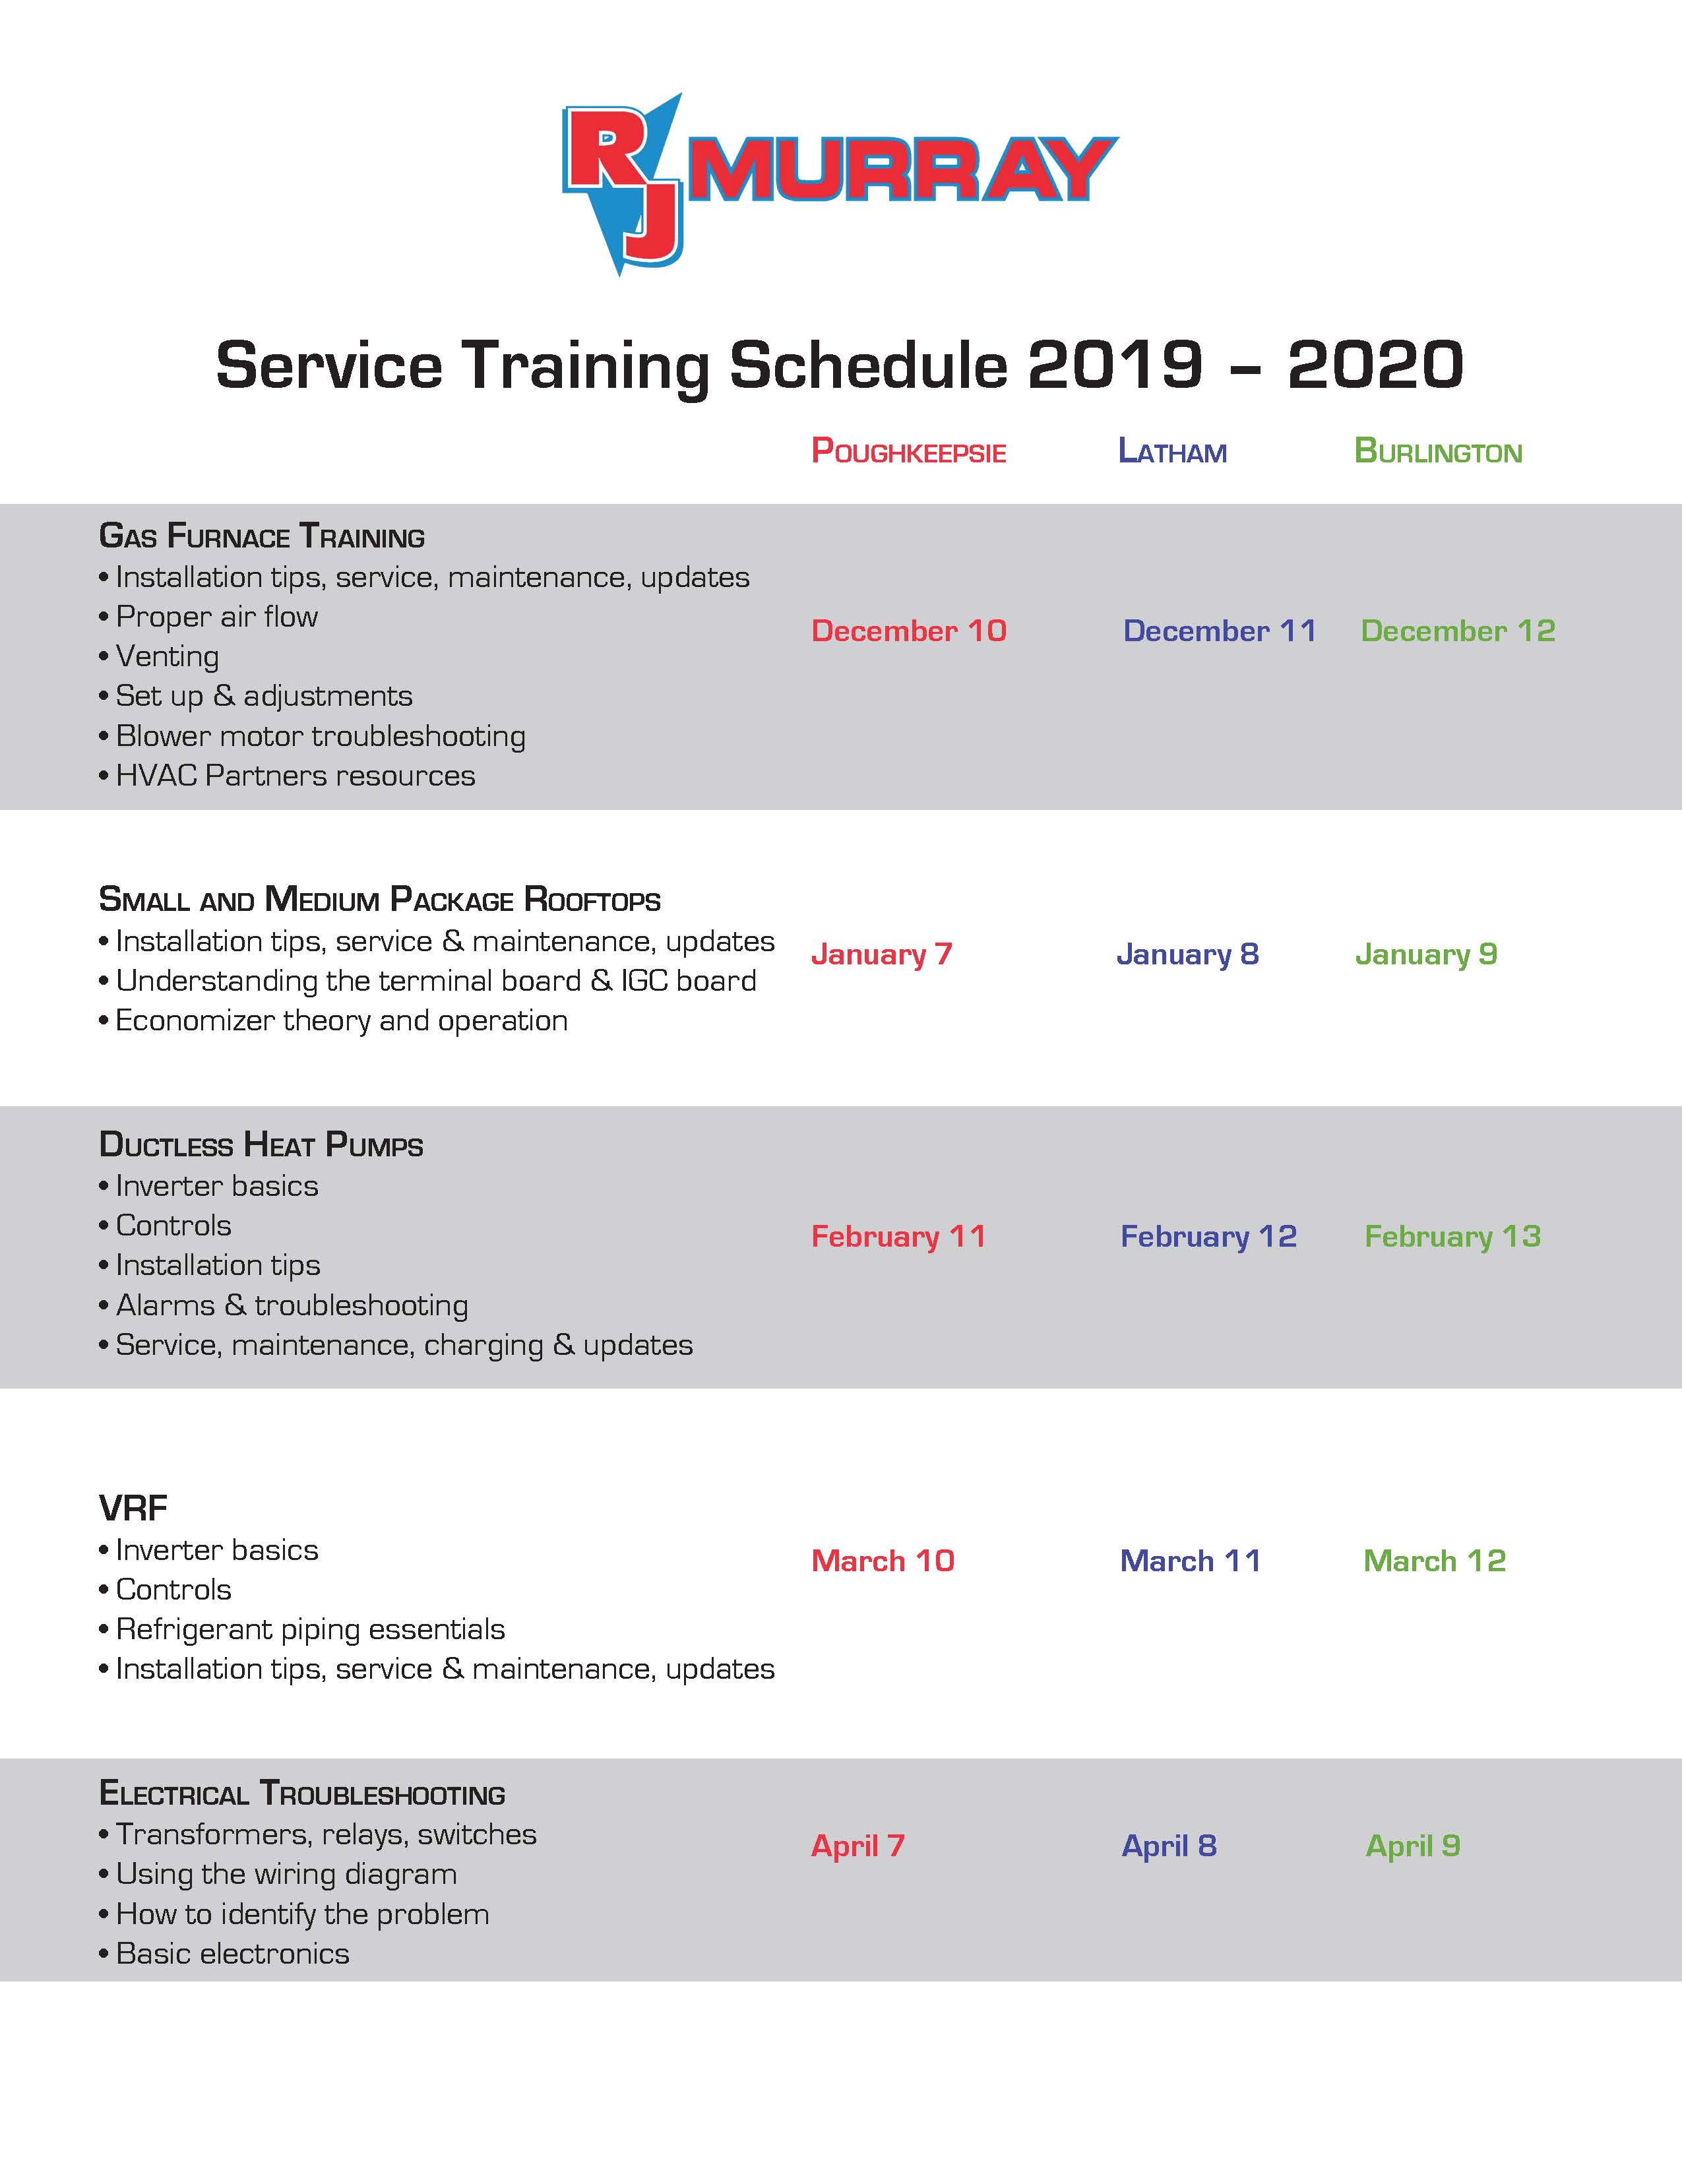 Uploaded Image: /vs-uploads/programs/RJM-2019-2020-HVAC-training-schedule.jpg